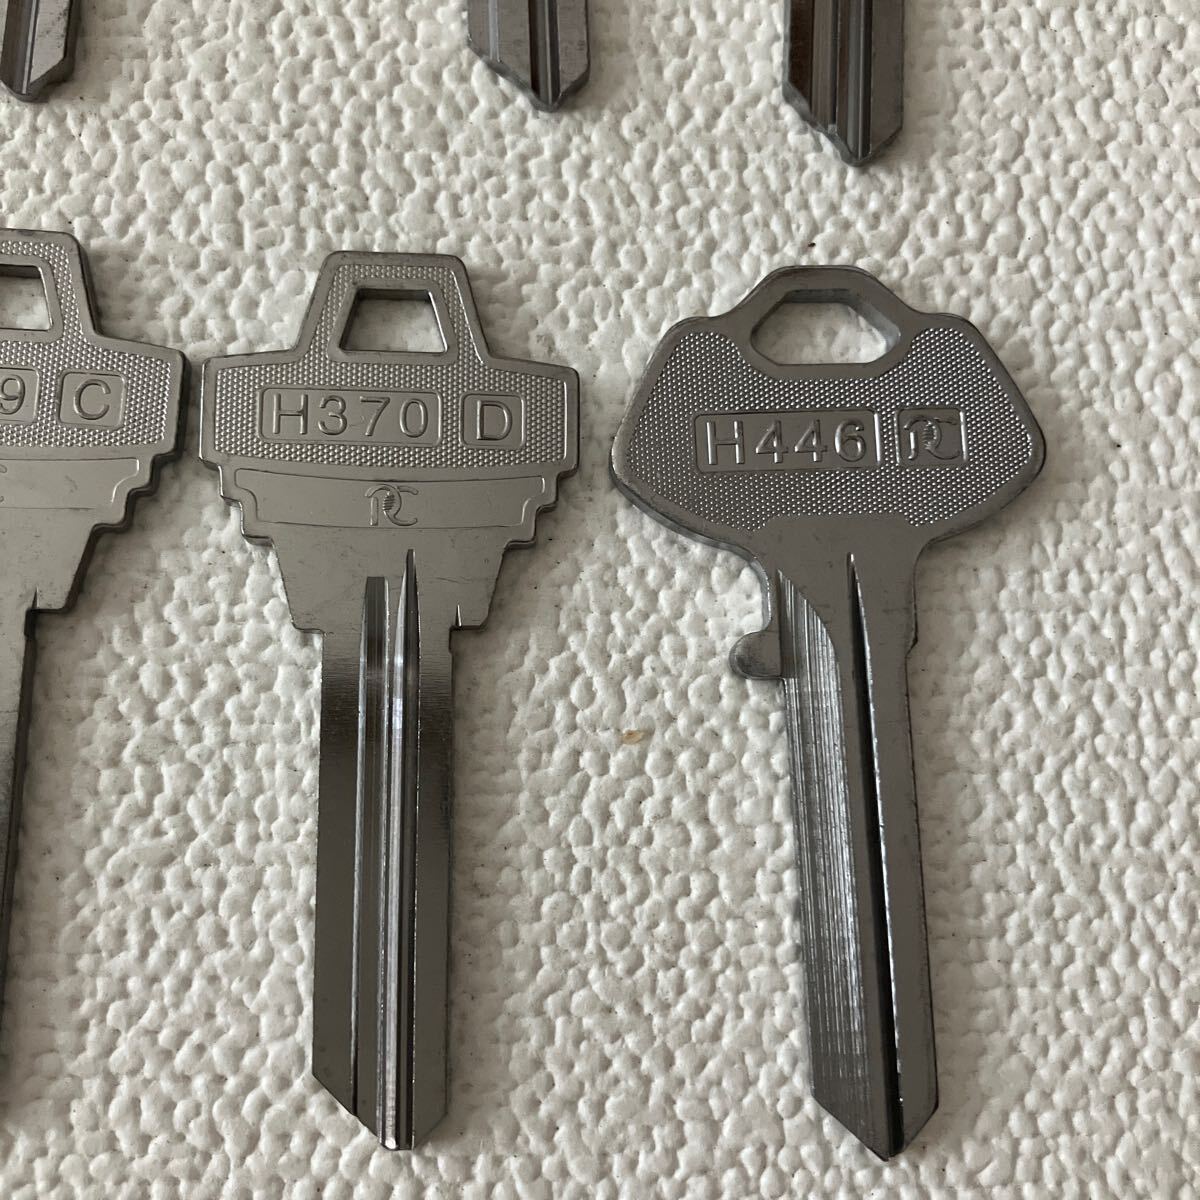 c306-12 60 未使用品 鍵 カギ まとめて 大量セット 合鍵 ブランクキー 加工 材料 カット 持込み コピーキー クローバー H番 370 369 372他